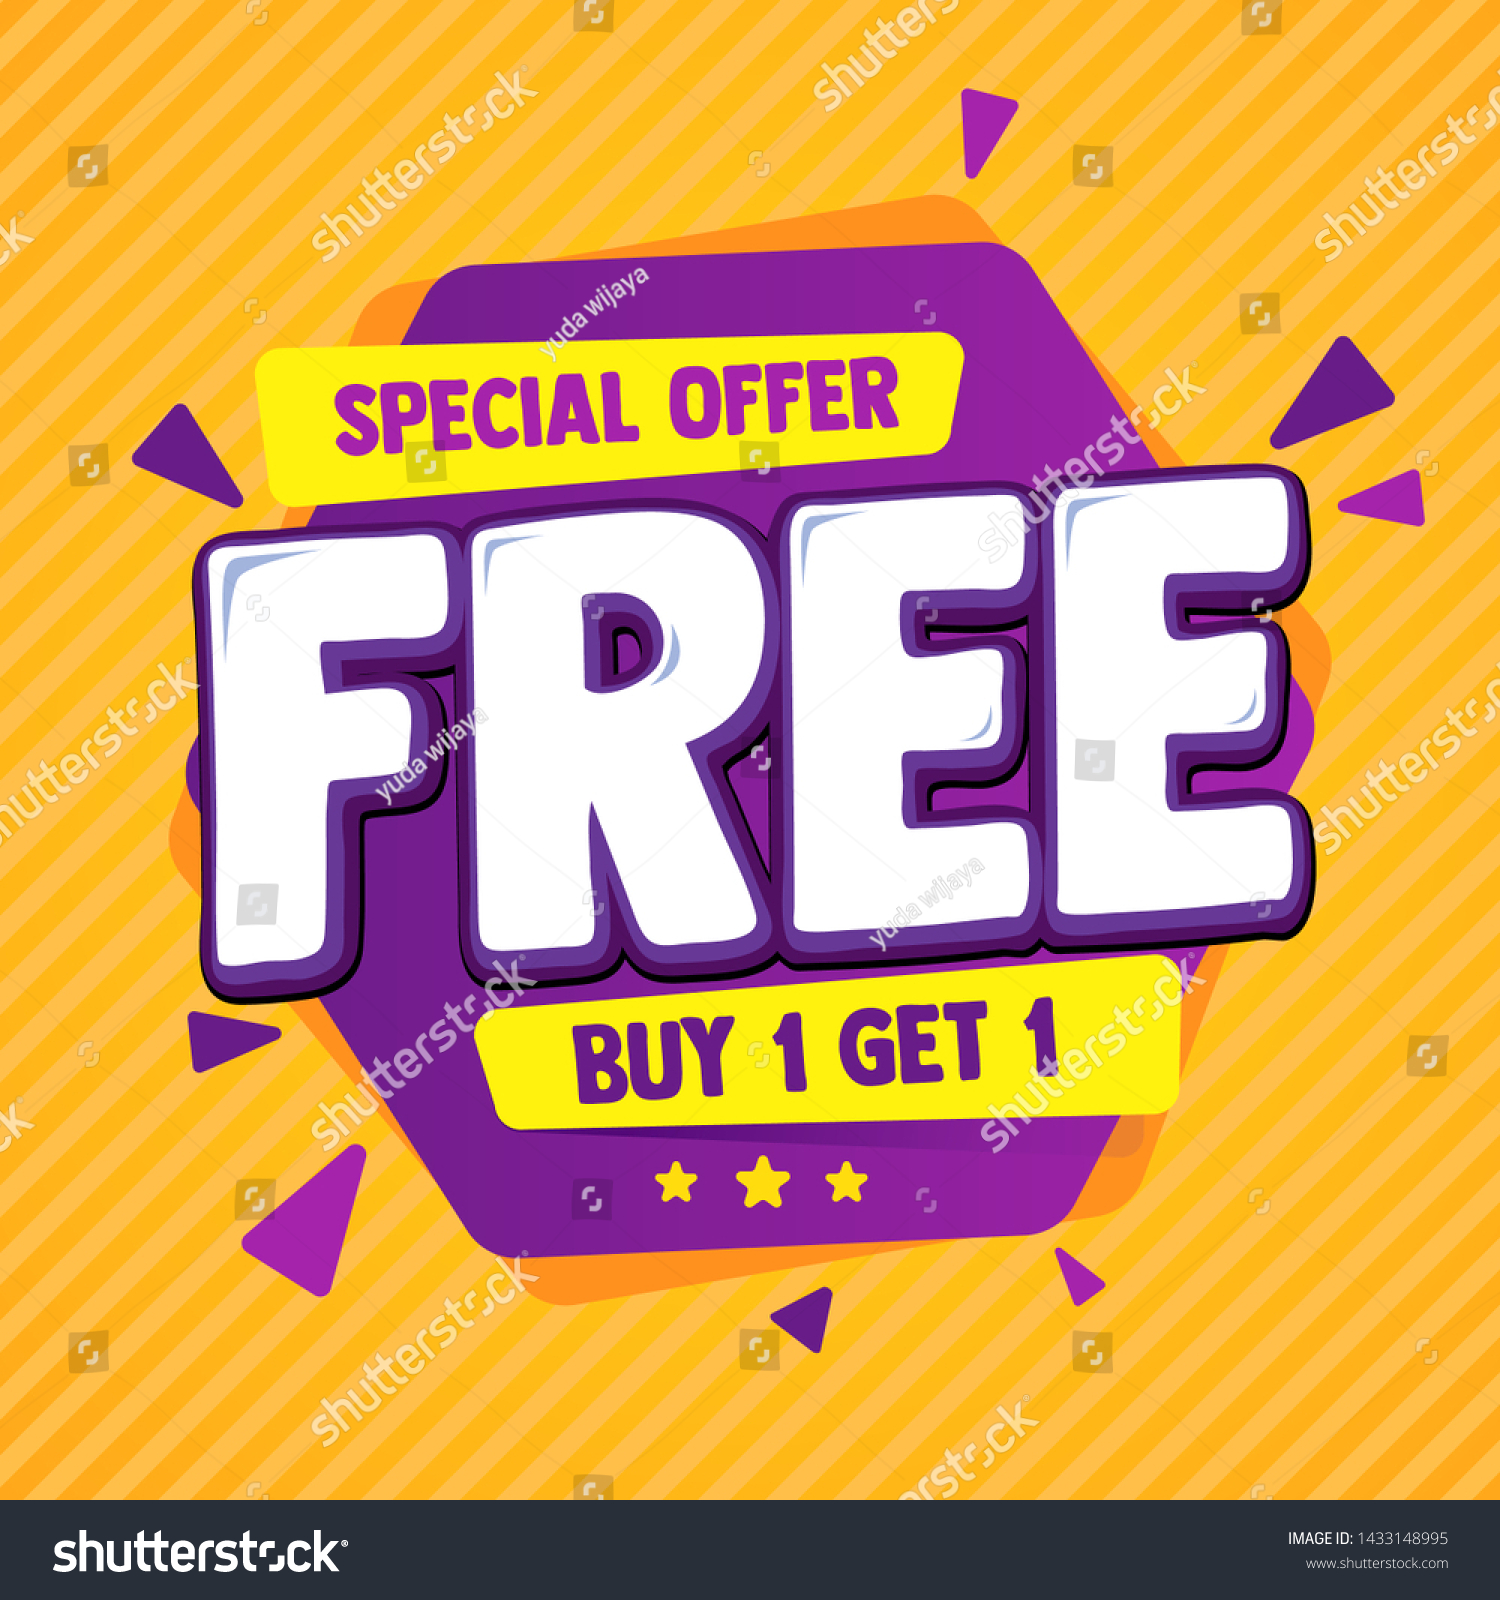 Special offer banner, hot sale, big sale, buy 1 get 1, sale banner vector, purple and orange vector banner #1433148995